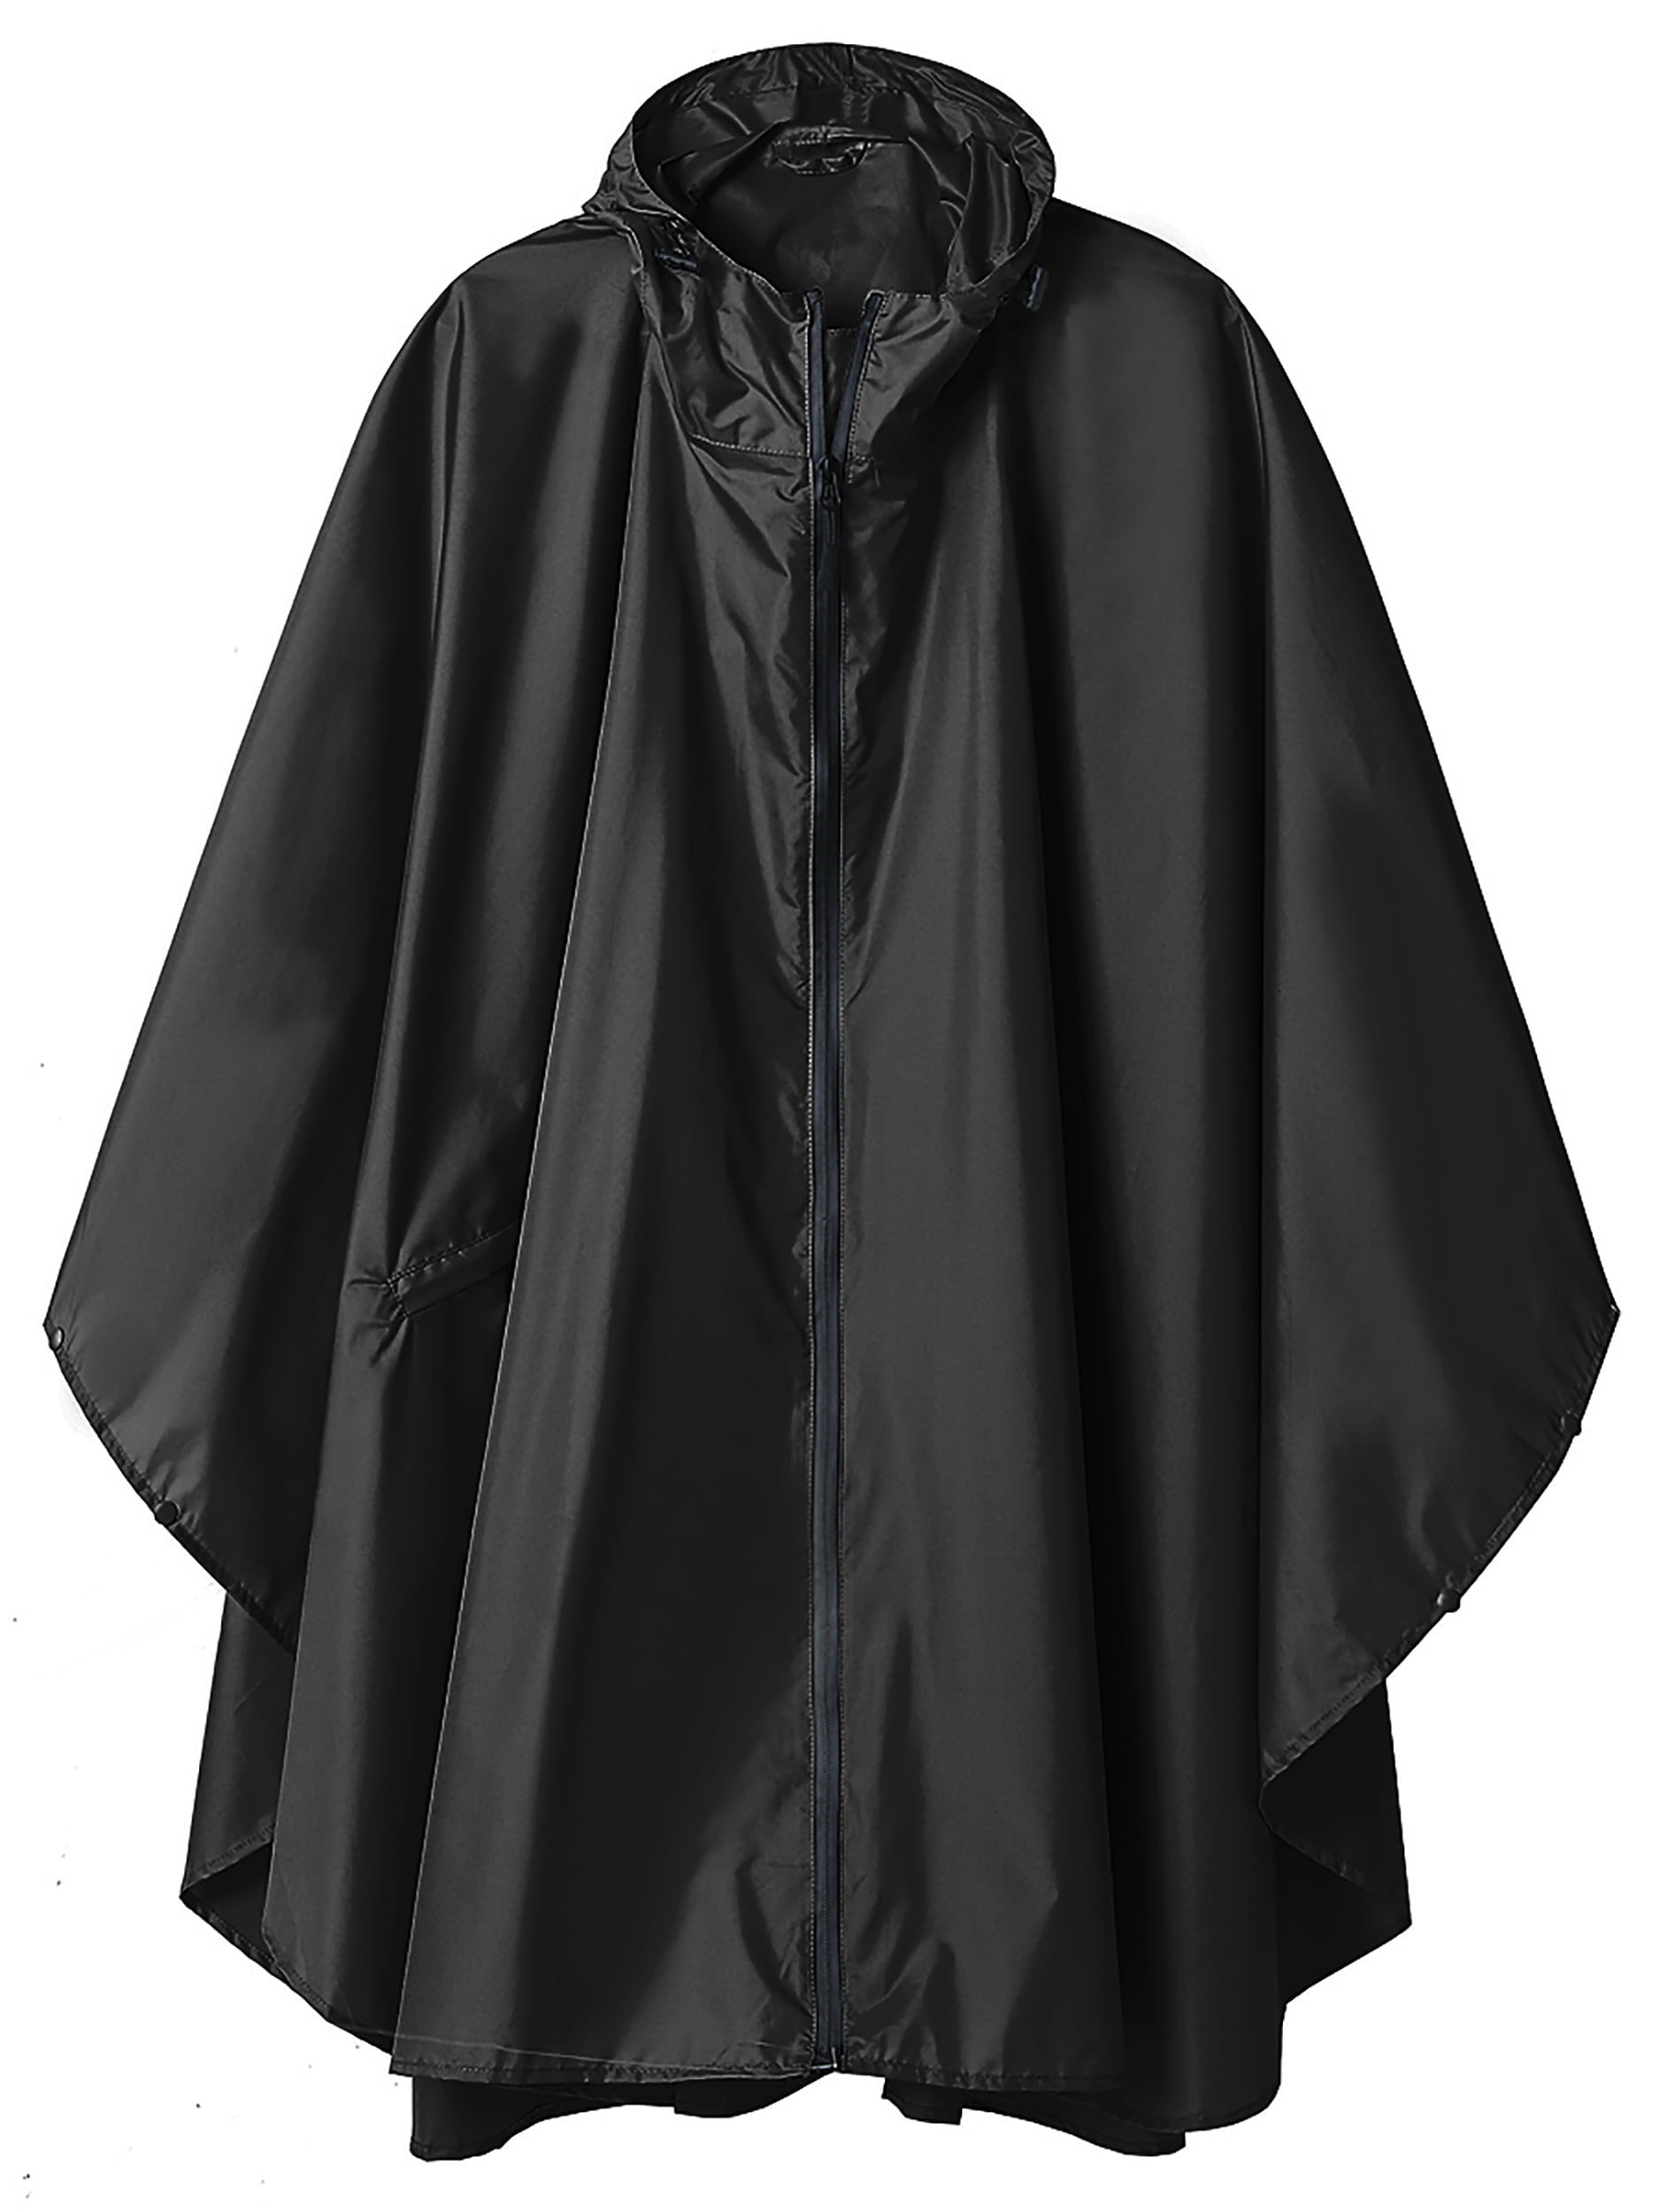 Poncho Waterproof Raincoat Jacket for Adults with Pockets Black Walmart.com